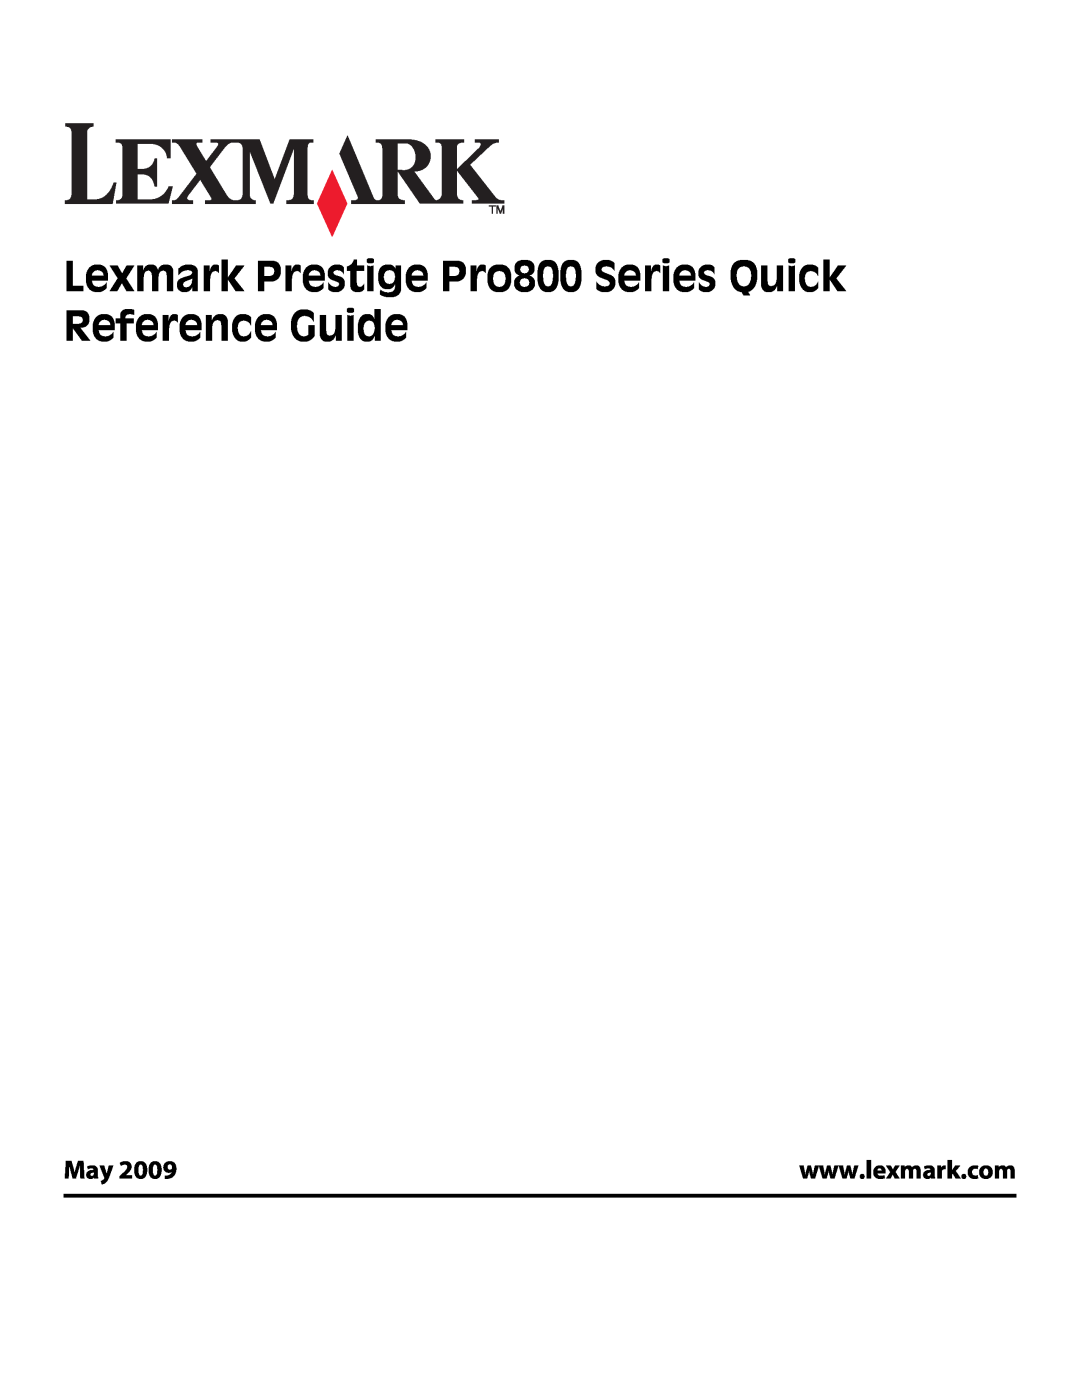 Lexmark Pro803 manual Lexmark Prestige Pro800 Series Quick Reference Guide 